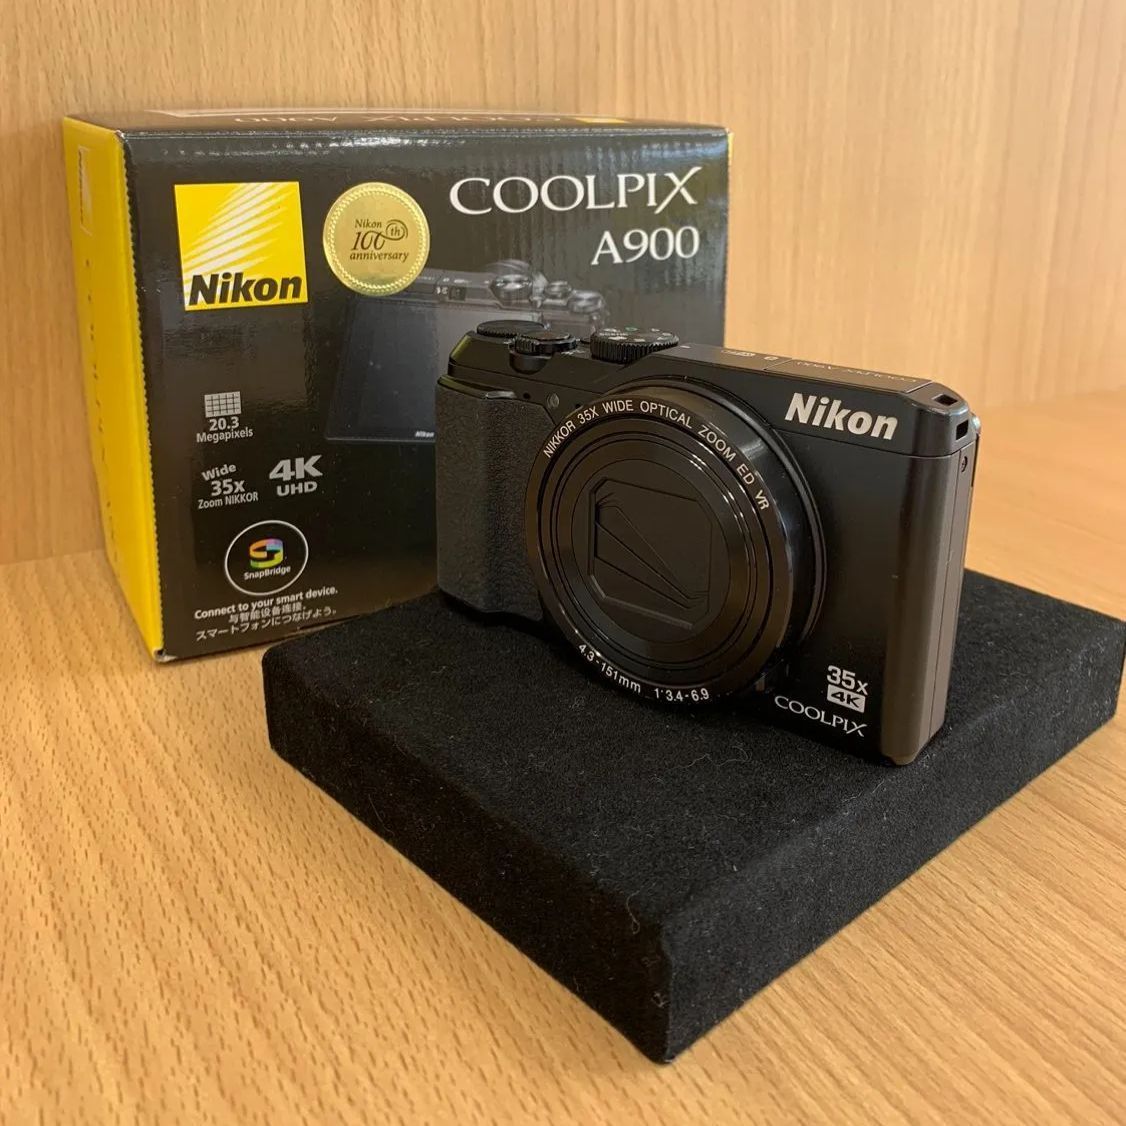 Nikon ニコン デジタルカメラ COOLPIX A900 光学35倍ズーム 2029万画素 ブラック A900BK FJ1396 